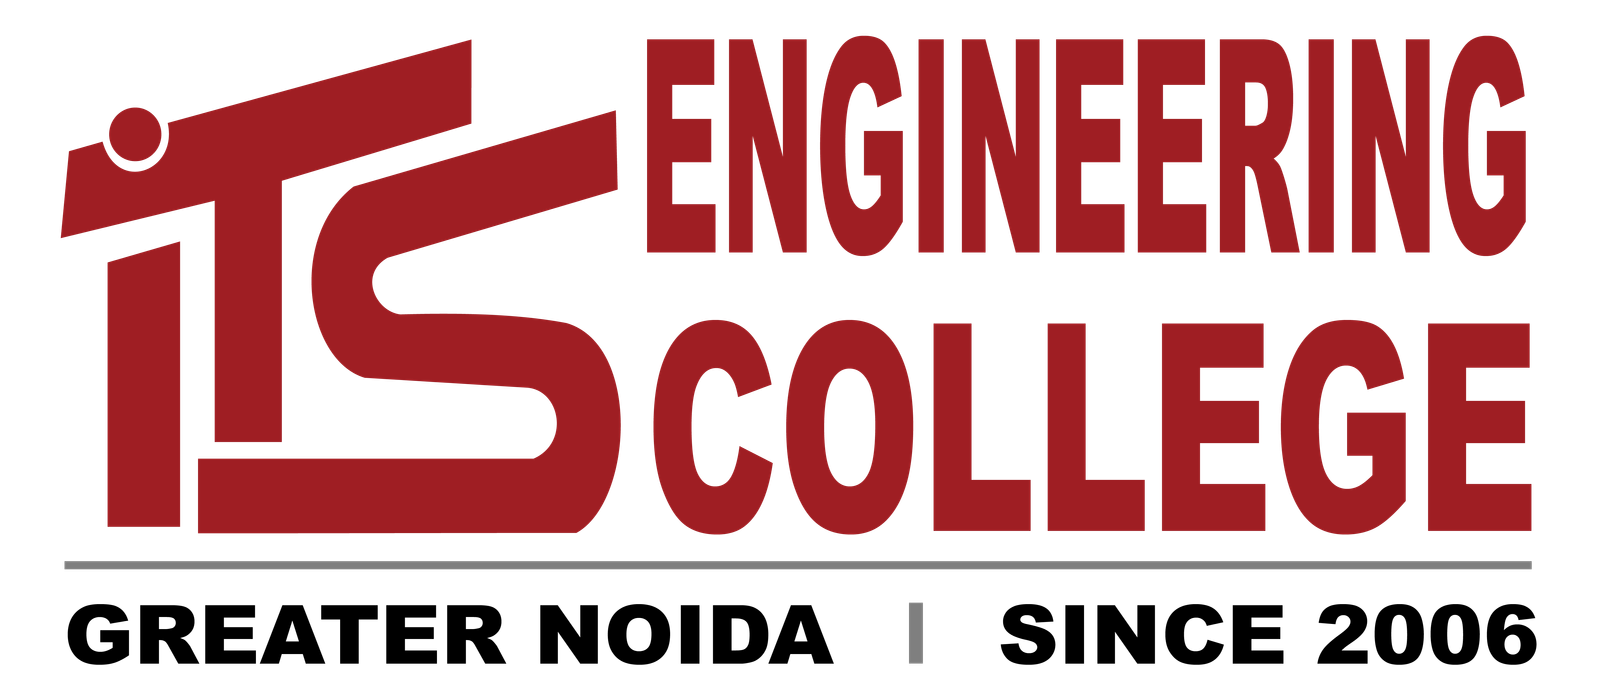 ITS_Engineering_College_Logo